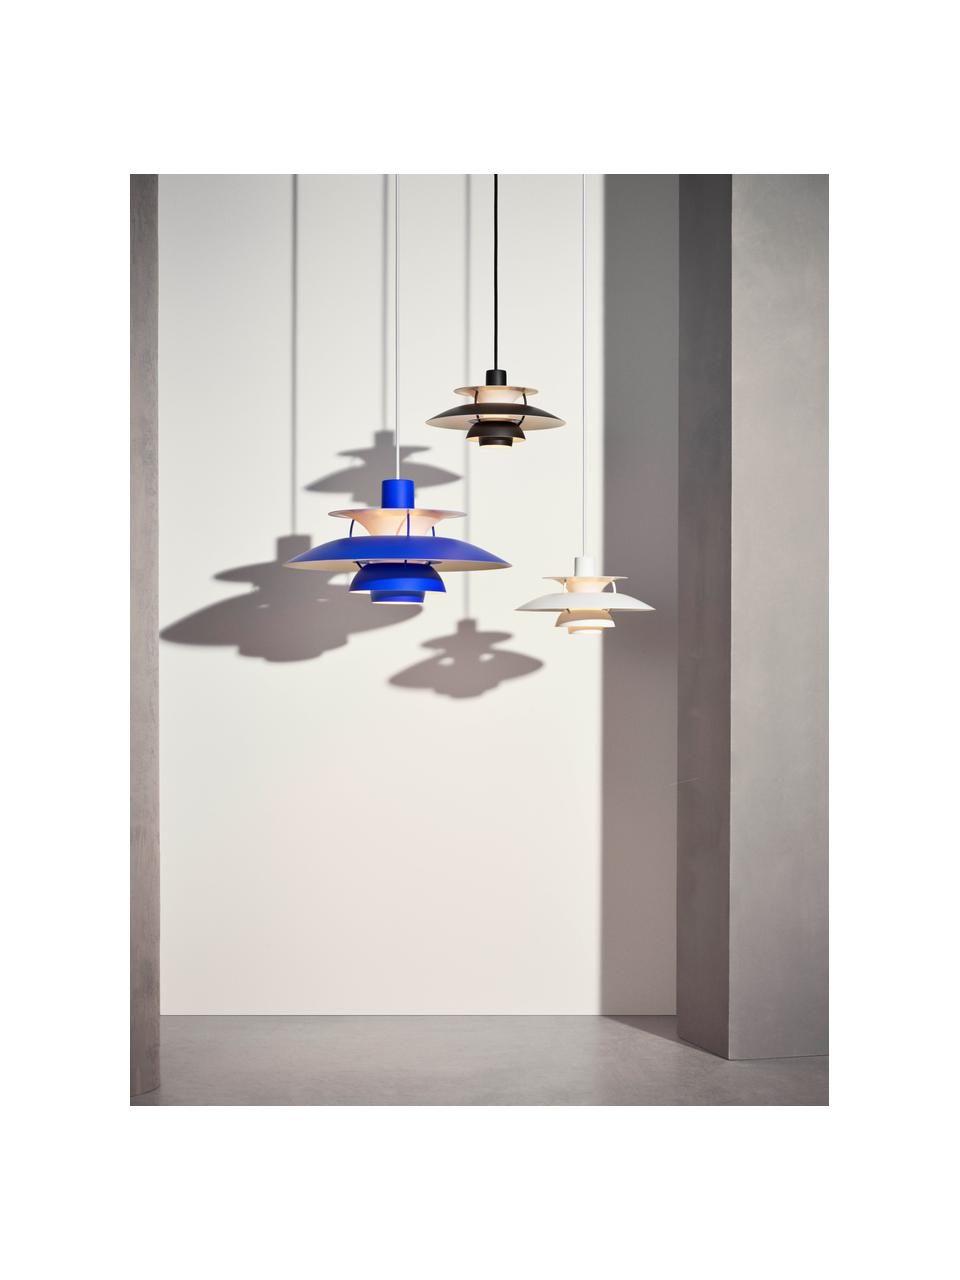 Hanglamp PH 5, verschillende formaten, Lampenkap: gecoat metaal, Diffuser: glas, semi-transparant, Koningsblauw, Ø 50 x H 27 cm